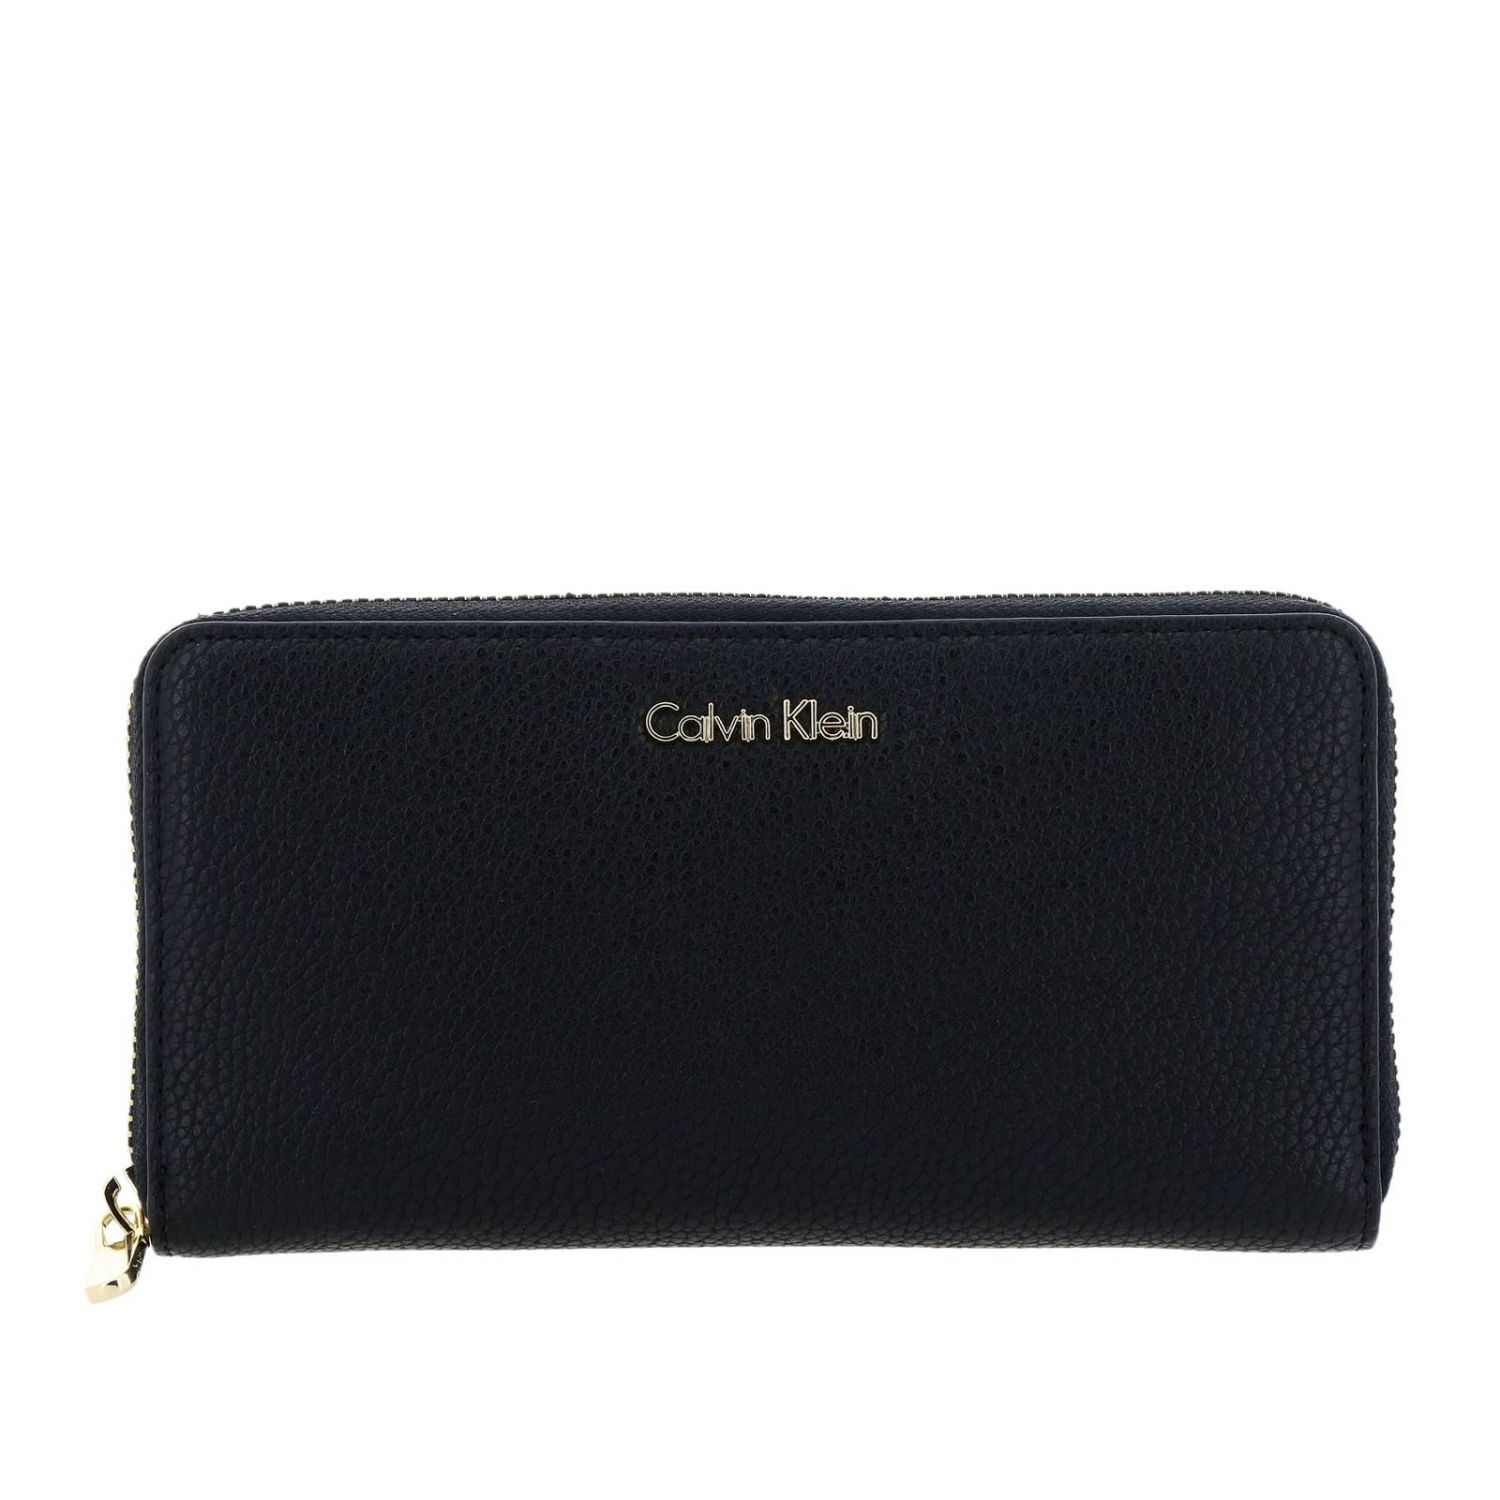 Calvin Klein Outlet: Wallet women - Black | Wallet Calvin Klein ...